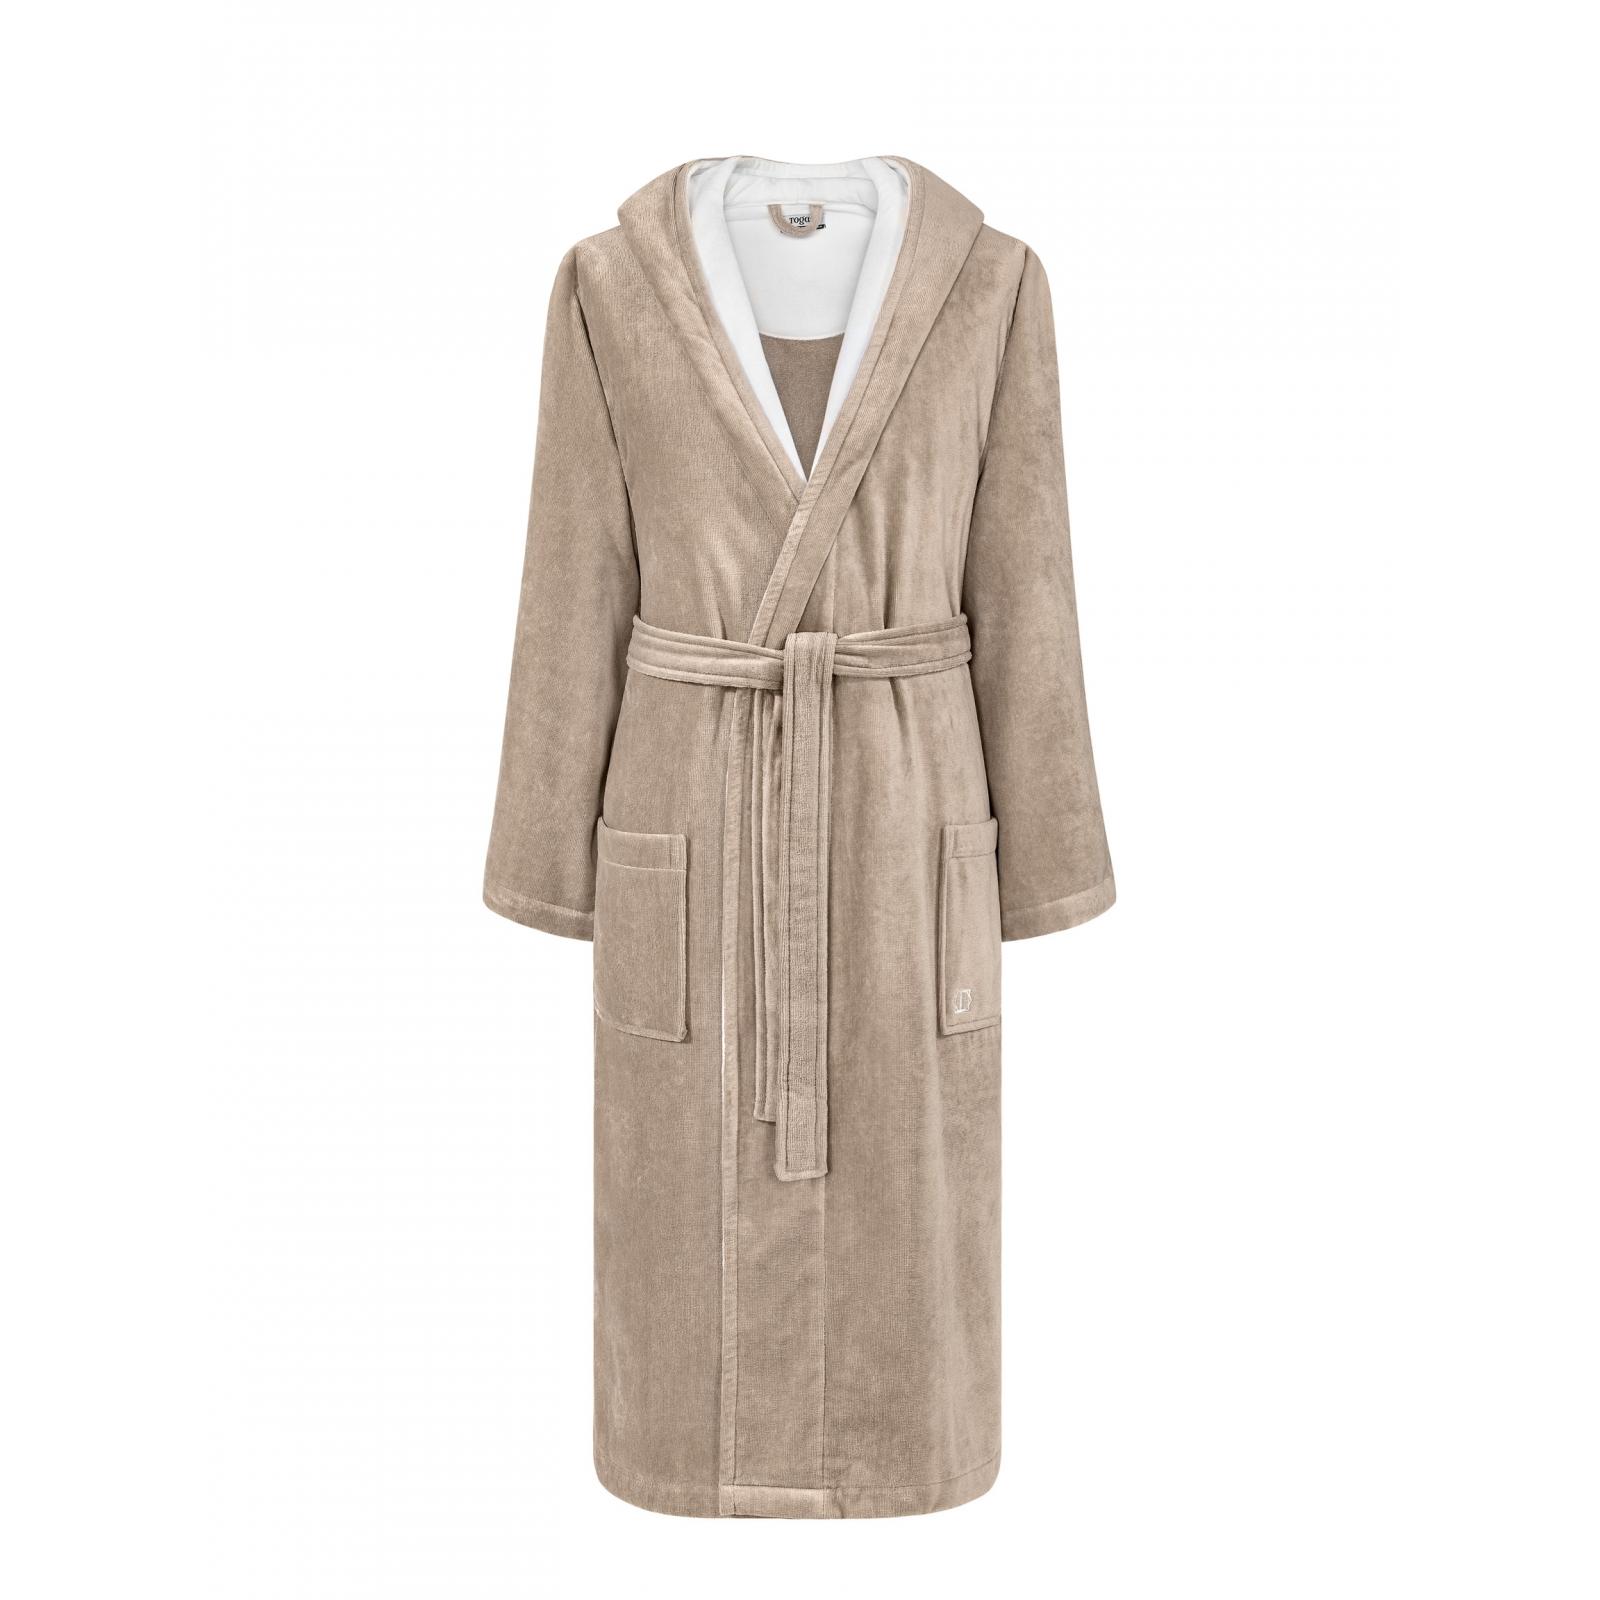 Халат Togas Арт Лайн коричневый с белым XL(52) халат кимоно короткое togas наоми чёрное l 48